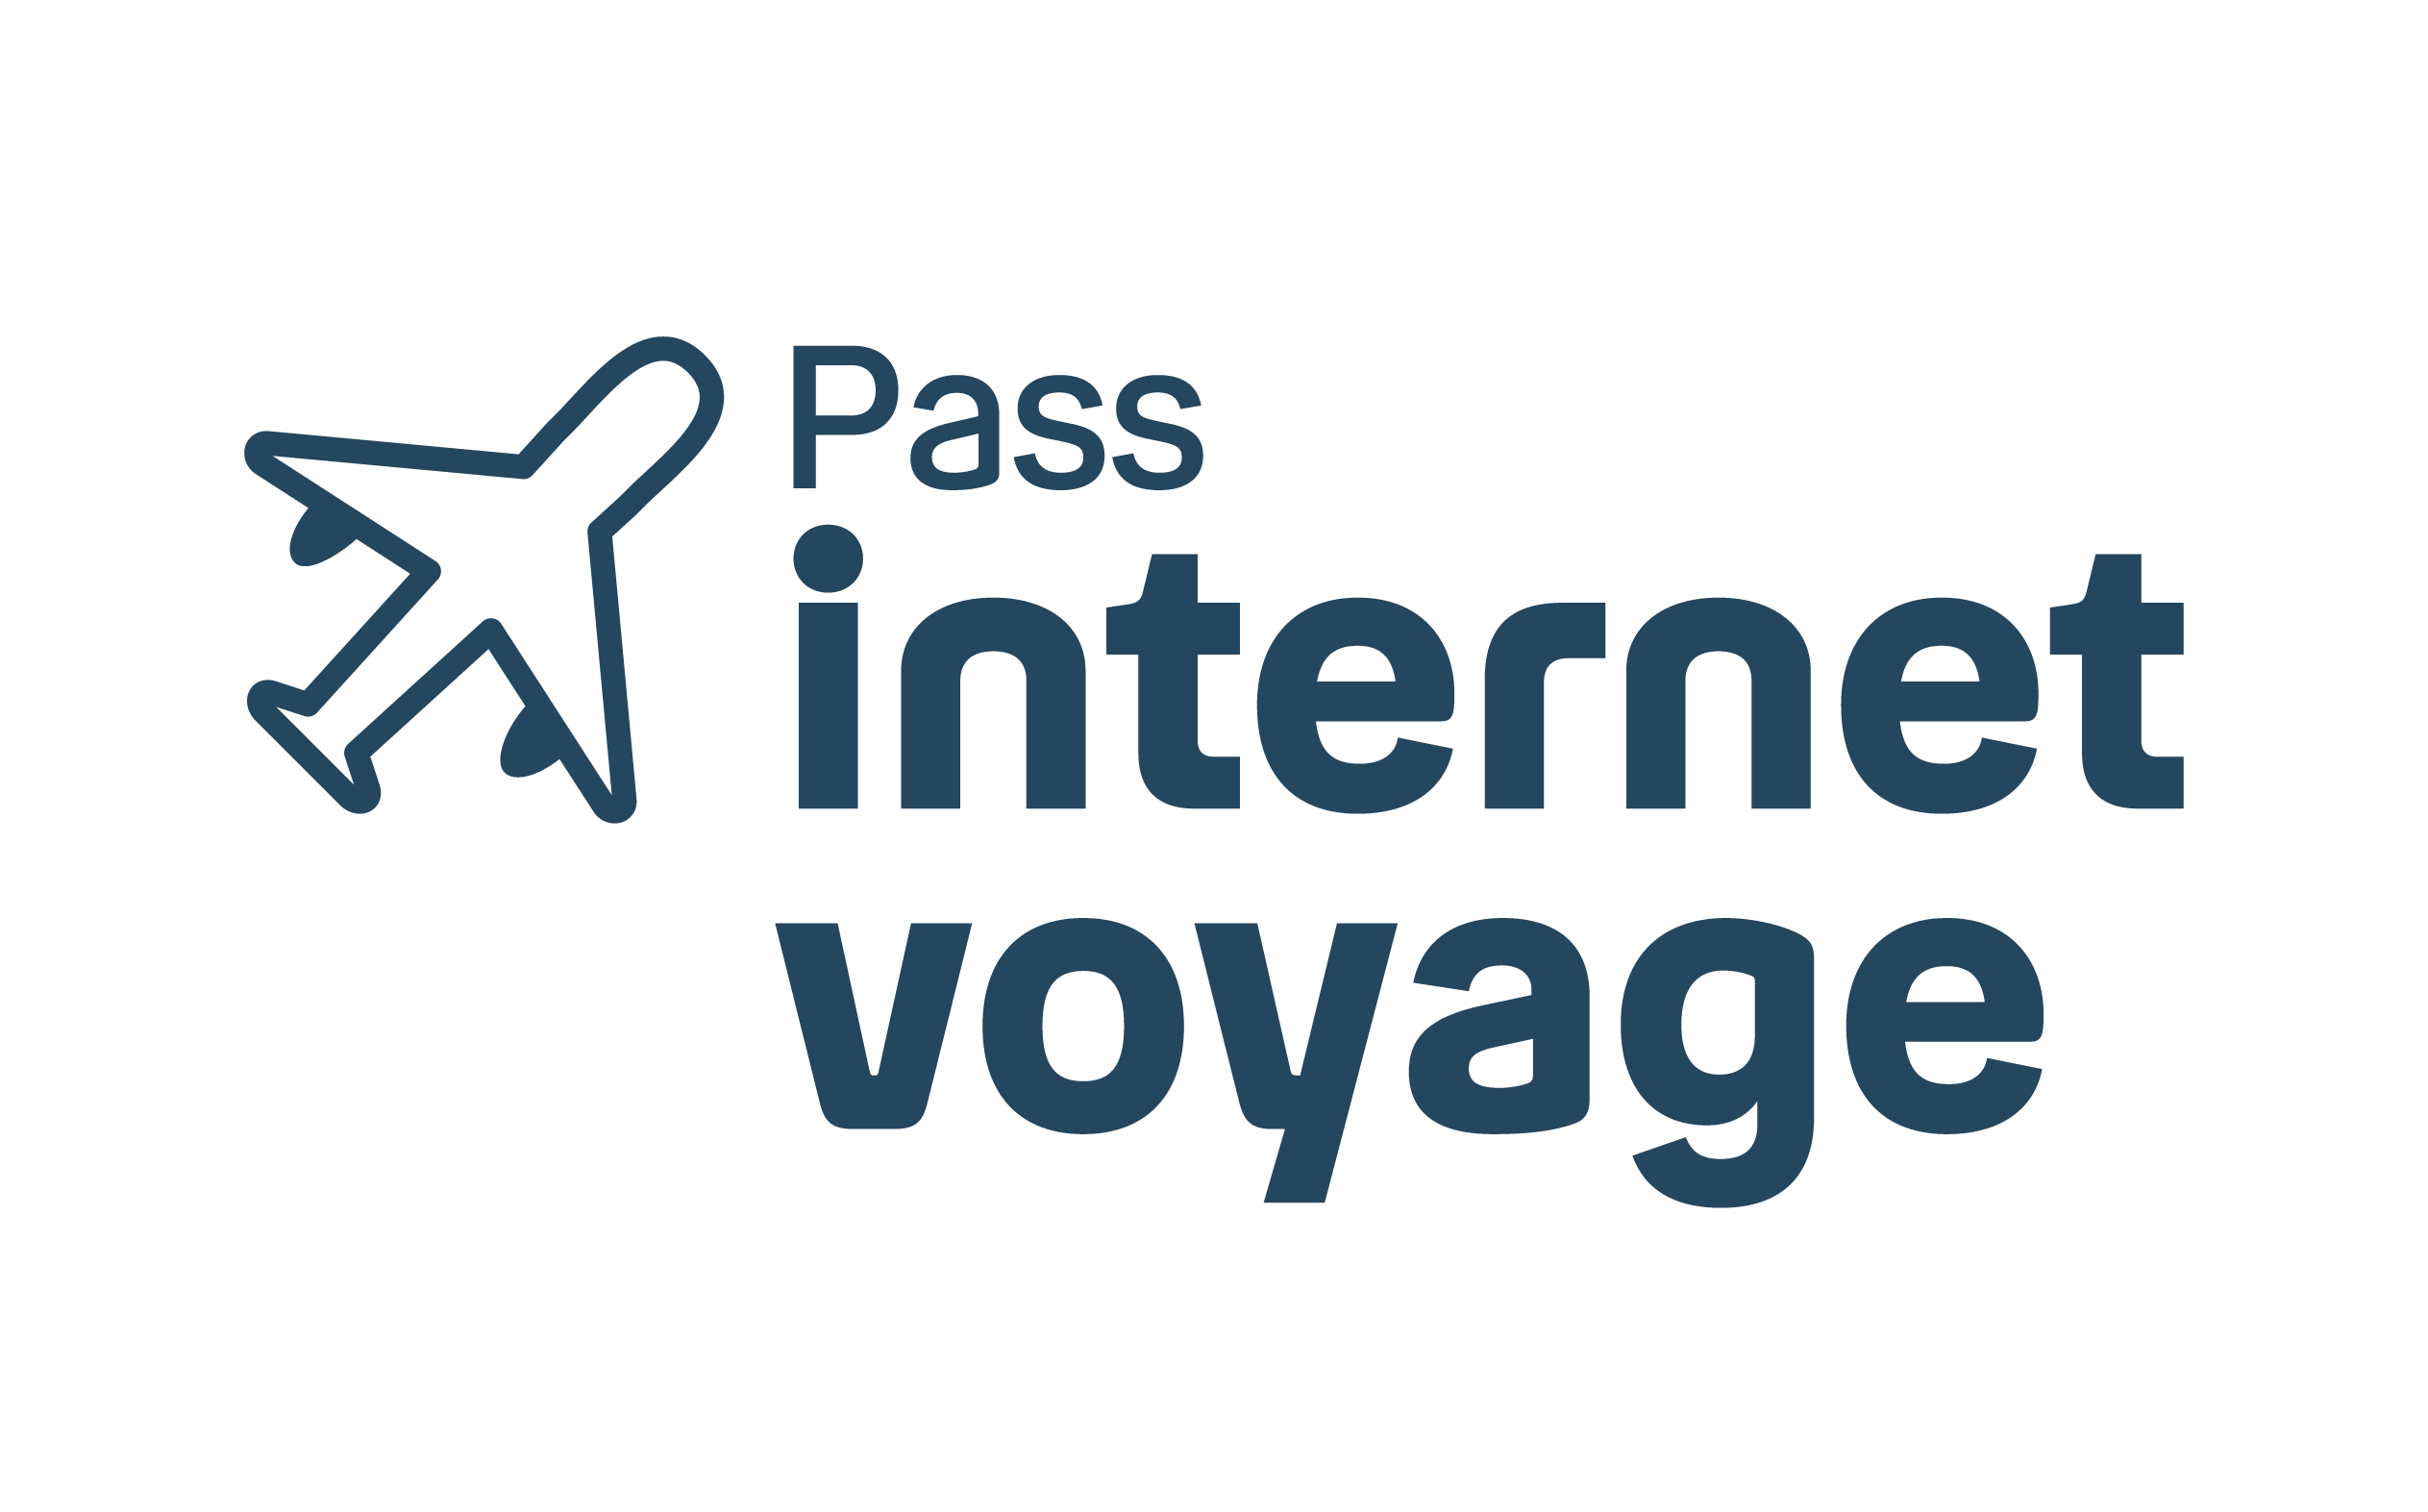 Pass internet voyage picto